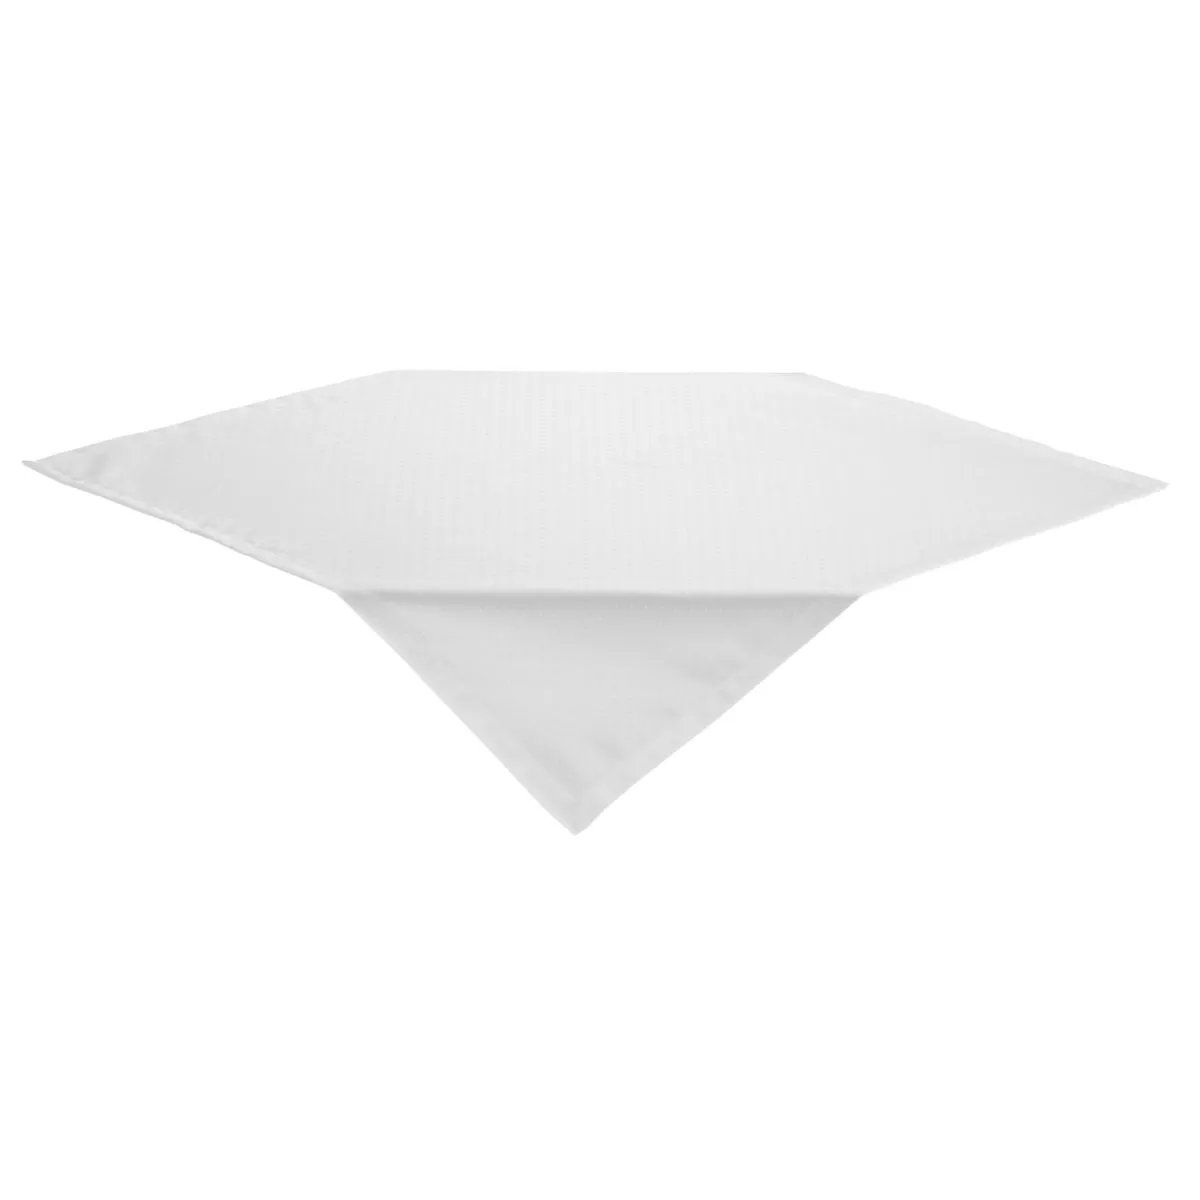 Coprimacchia Rhône ; 100x100 cm (LxL); bianco; quadrata; 2 pz. / confezione